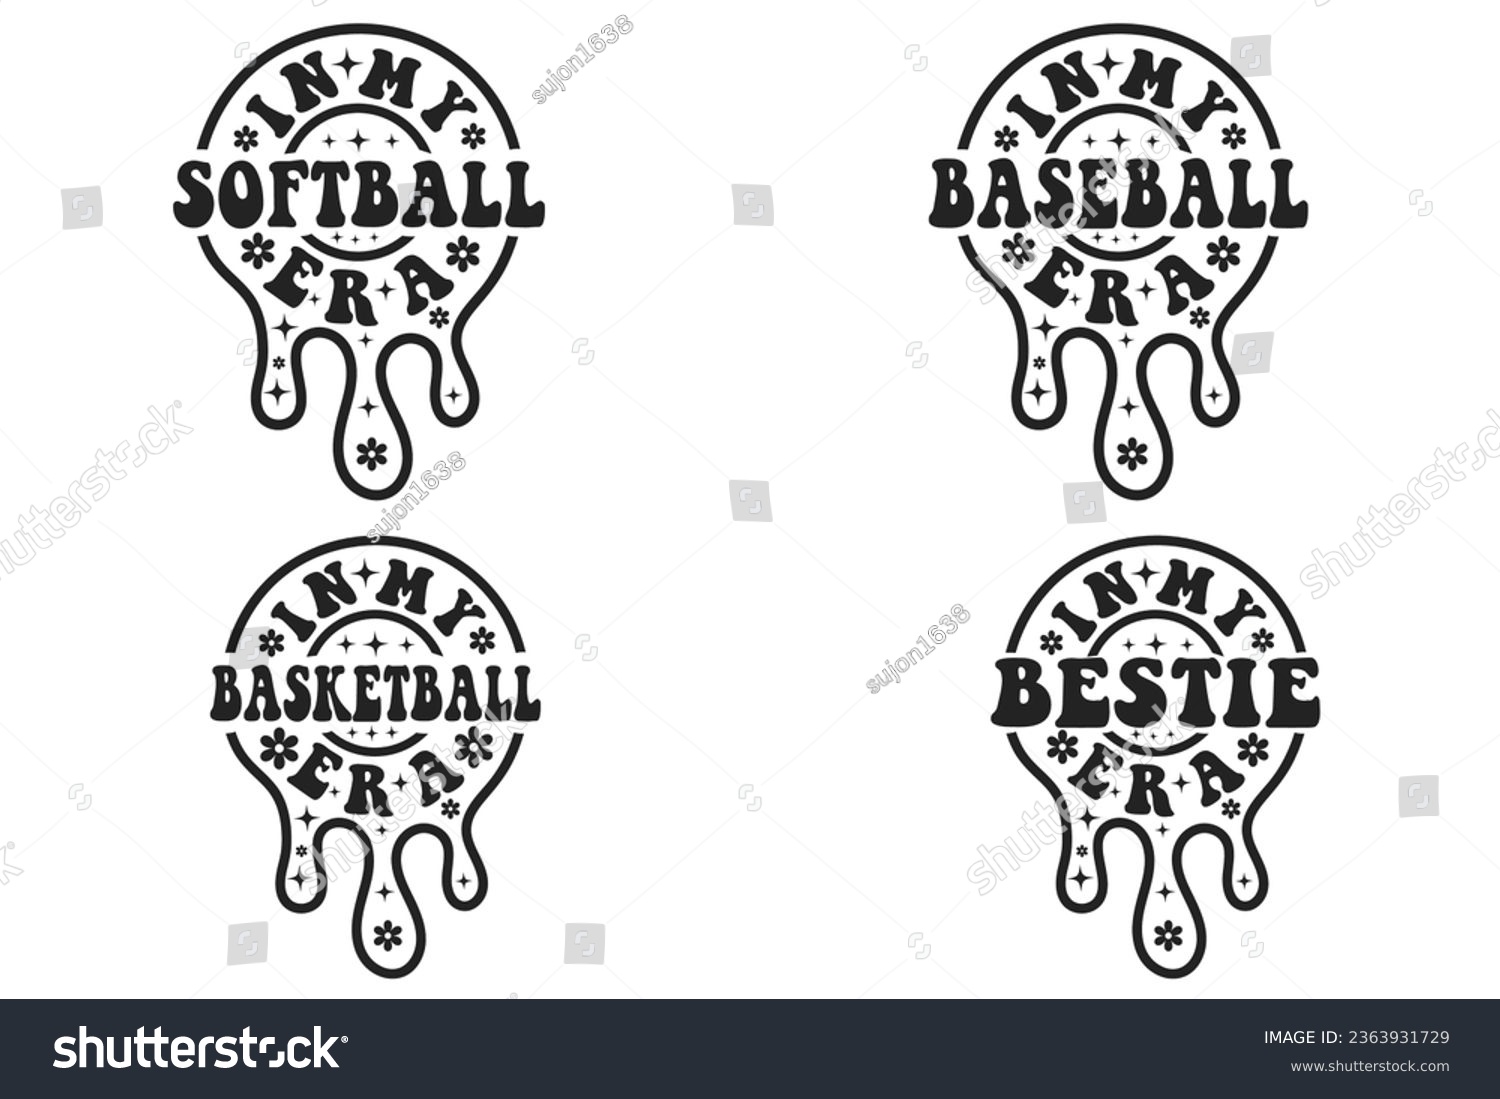 SVG of In my softball era, In my baseball era, In my basketball era, In my Bestie era retro wavy Bundle T-shirt designs svg